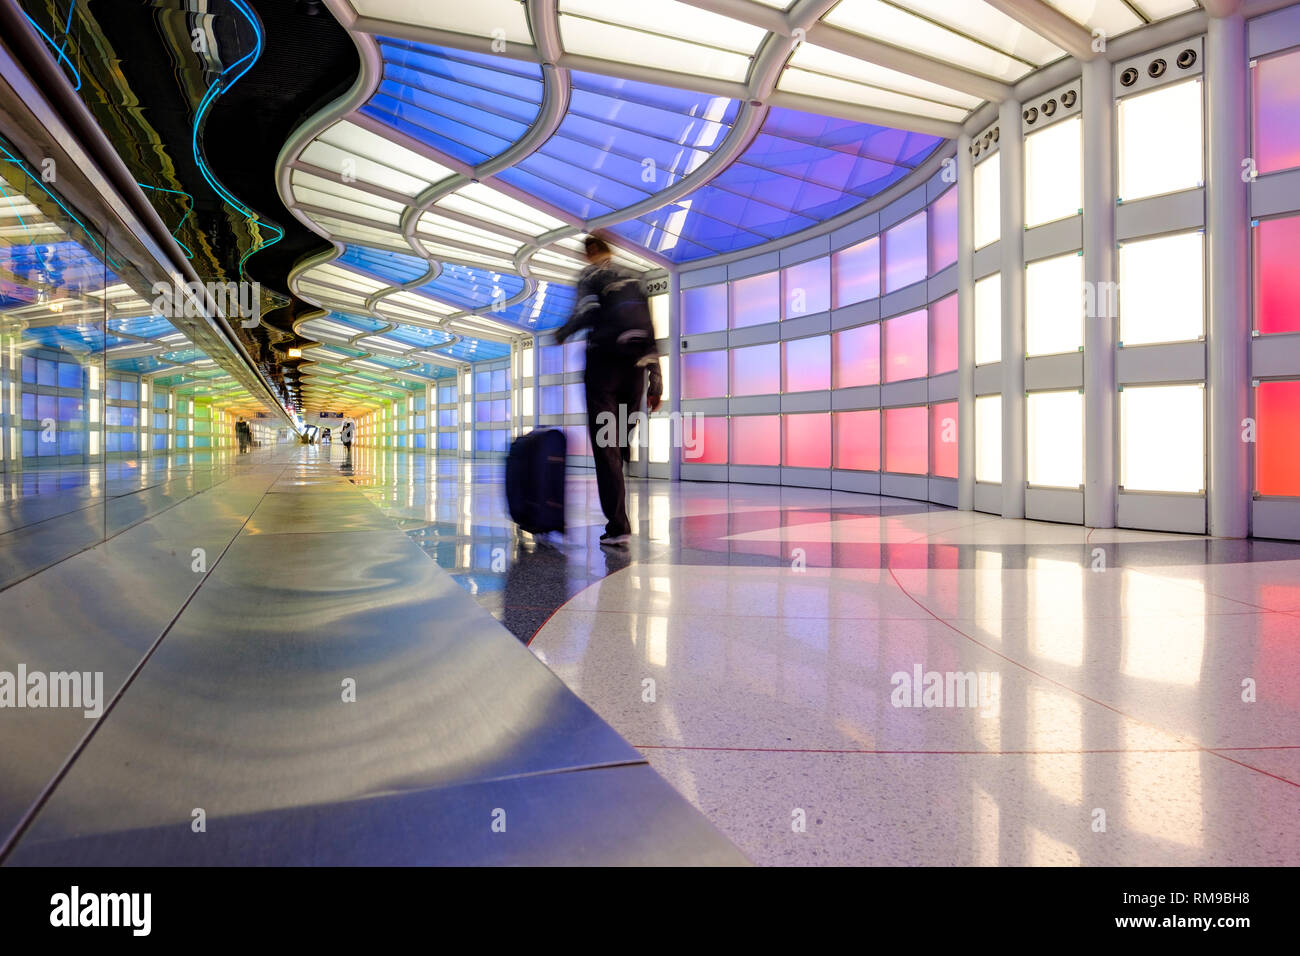 Neon art installation Sky's The Limit, by Michael Hayden, Helmut Jahn Terminal 1, Chicago O'Hare International Airport Terminal, Illinois, USA Stock Photo